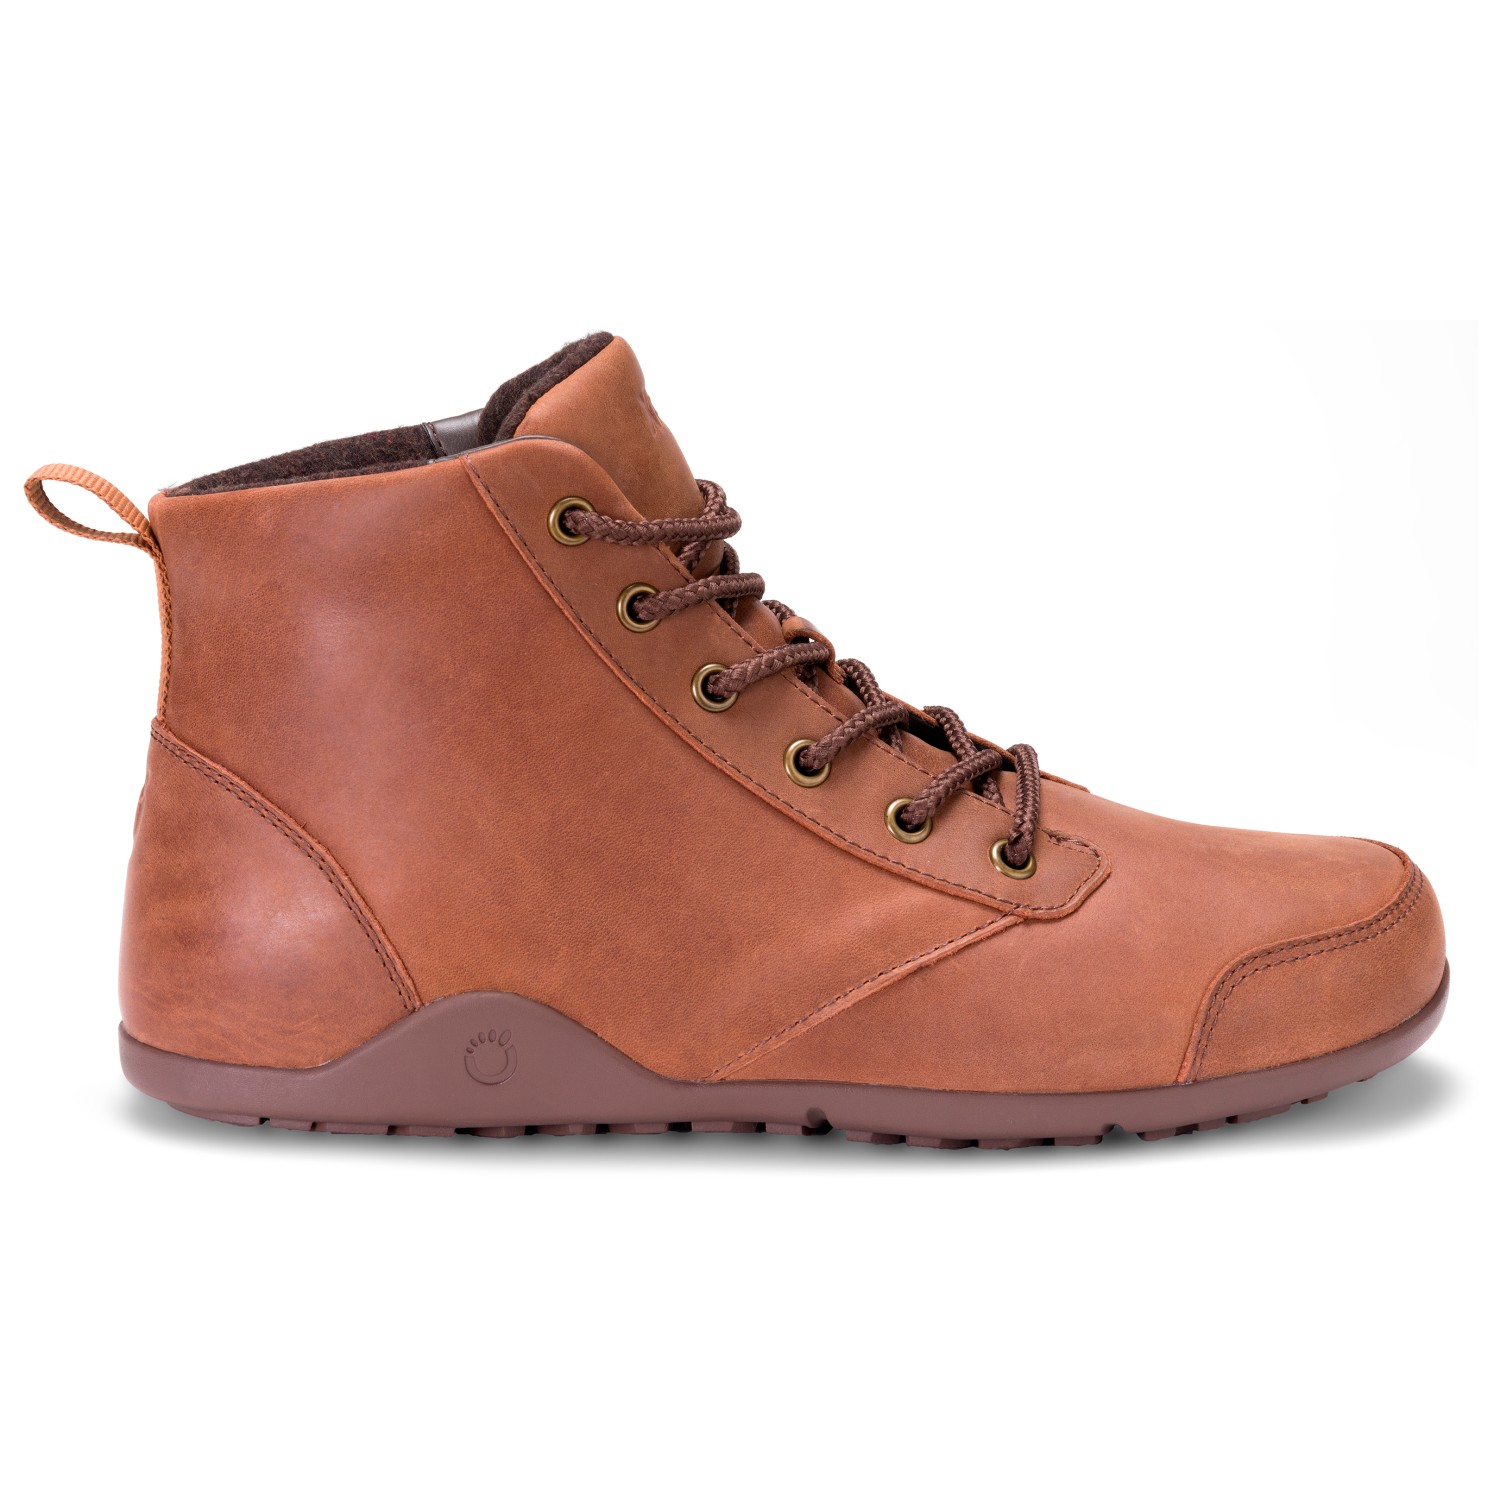 Босоножки Xero Shoes Denver Leather, коричневый 7 cm shoes leather shoes